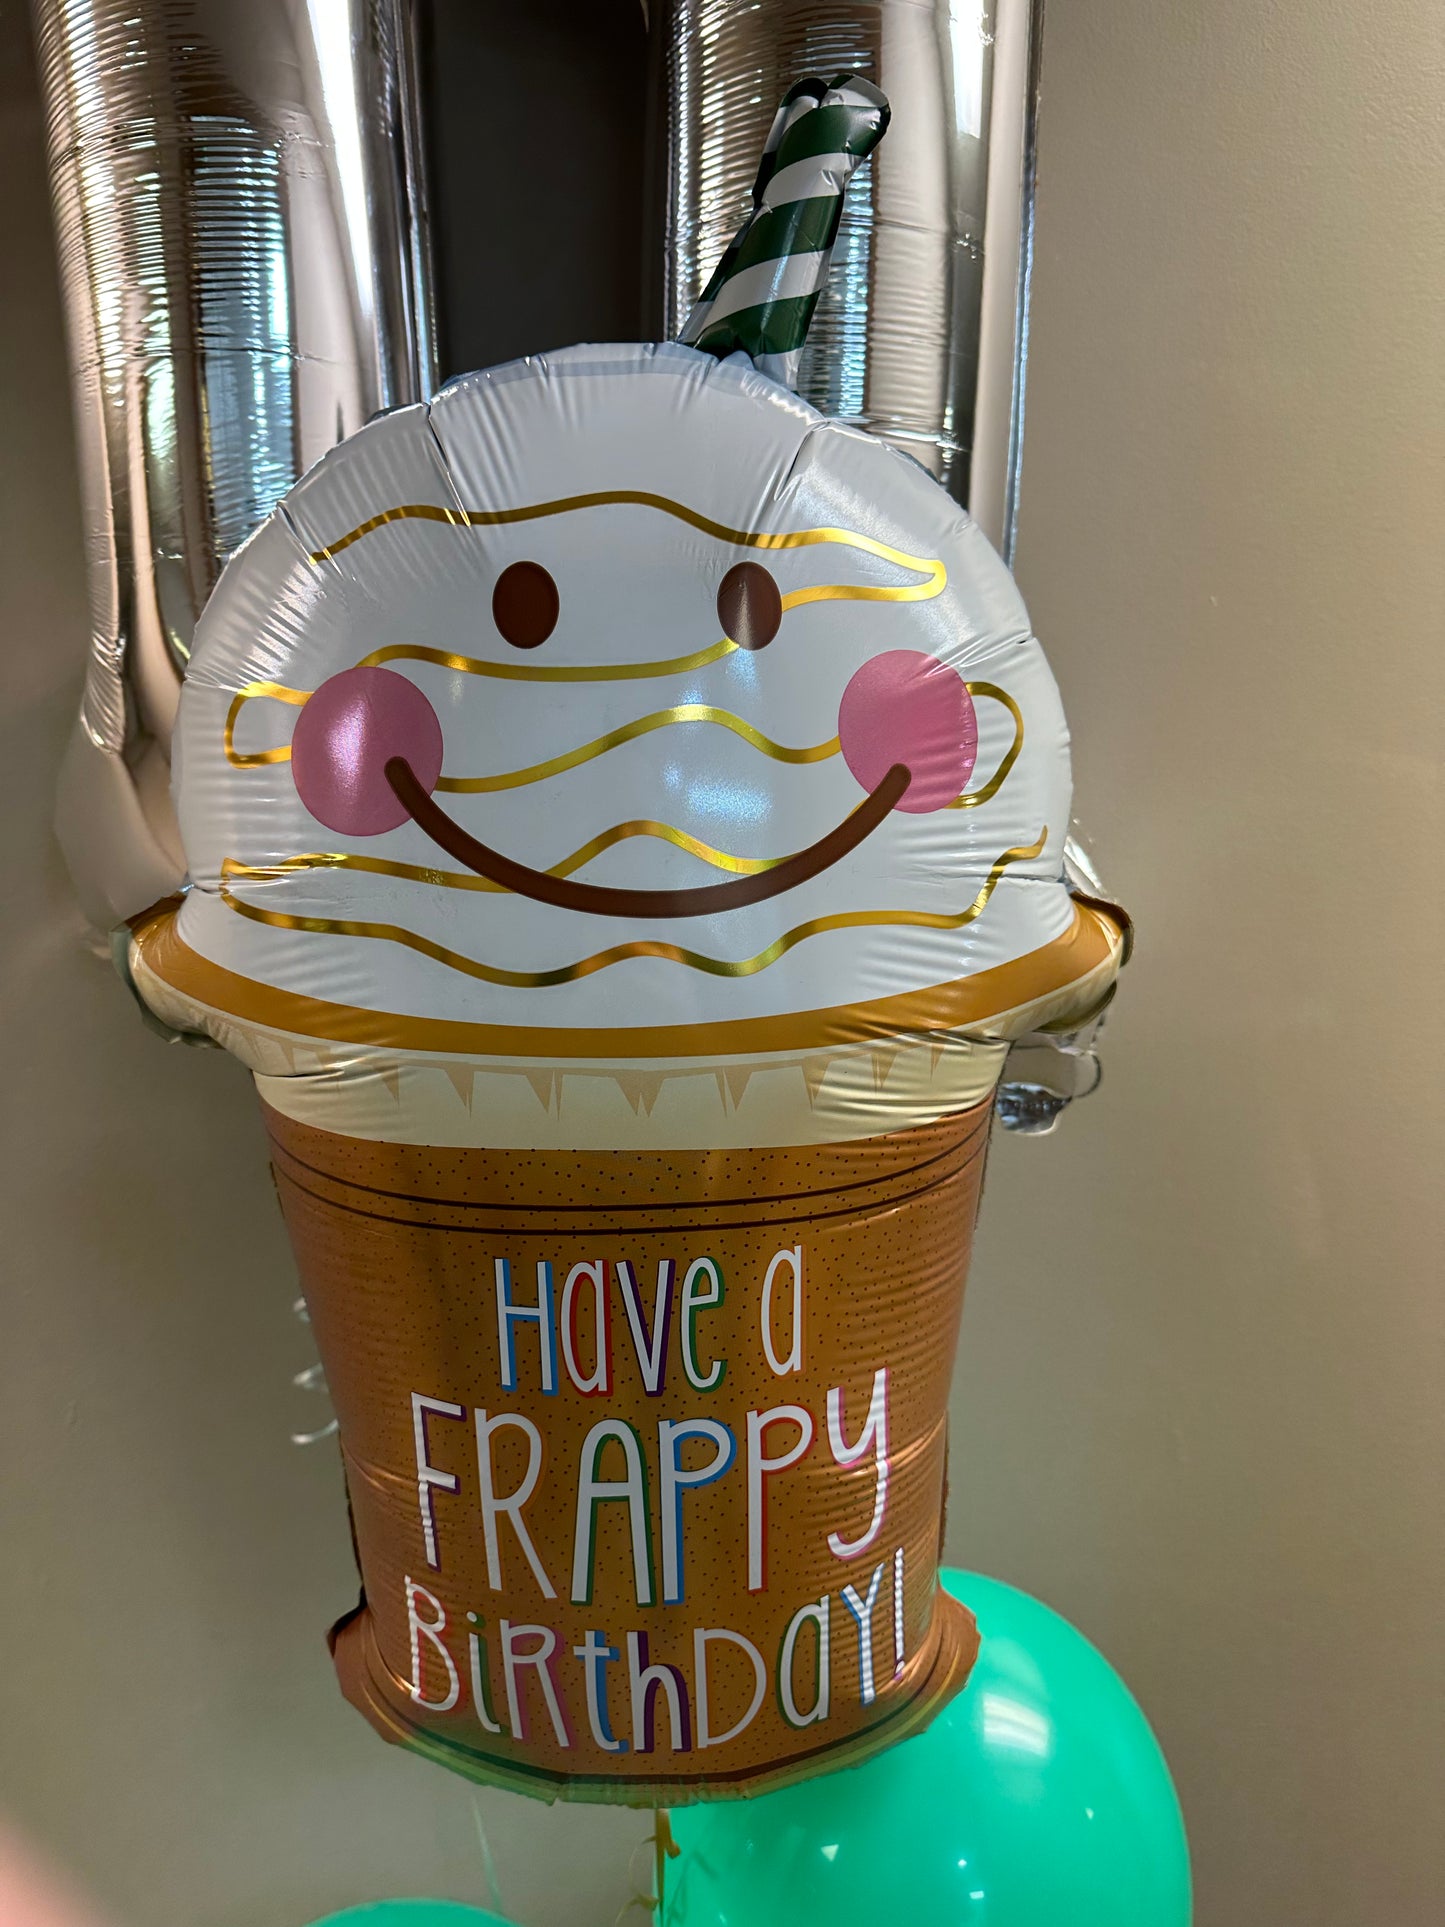 Frappy Birthday - SuperShape